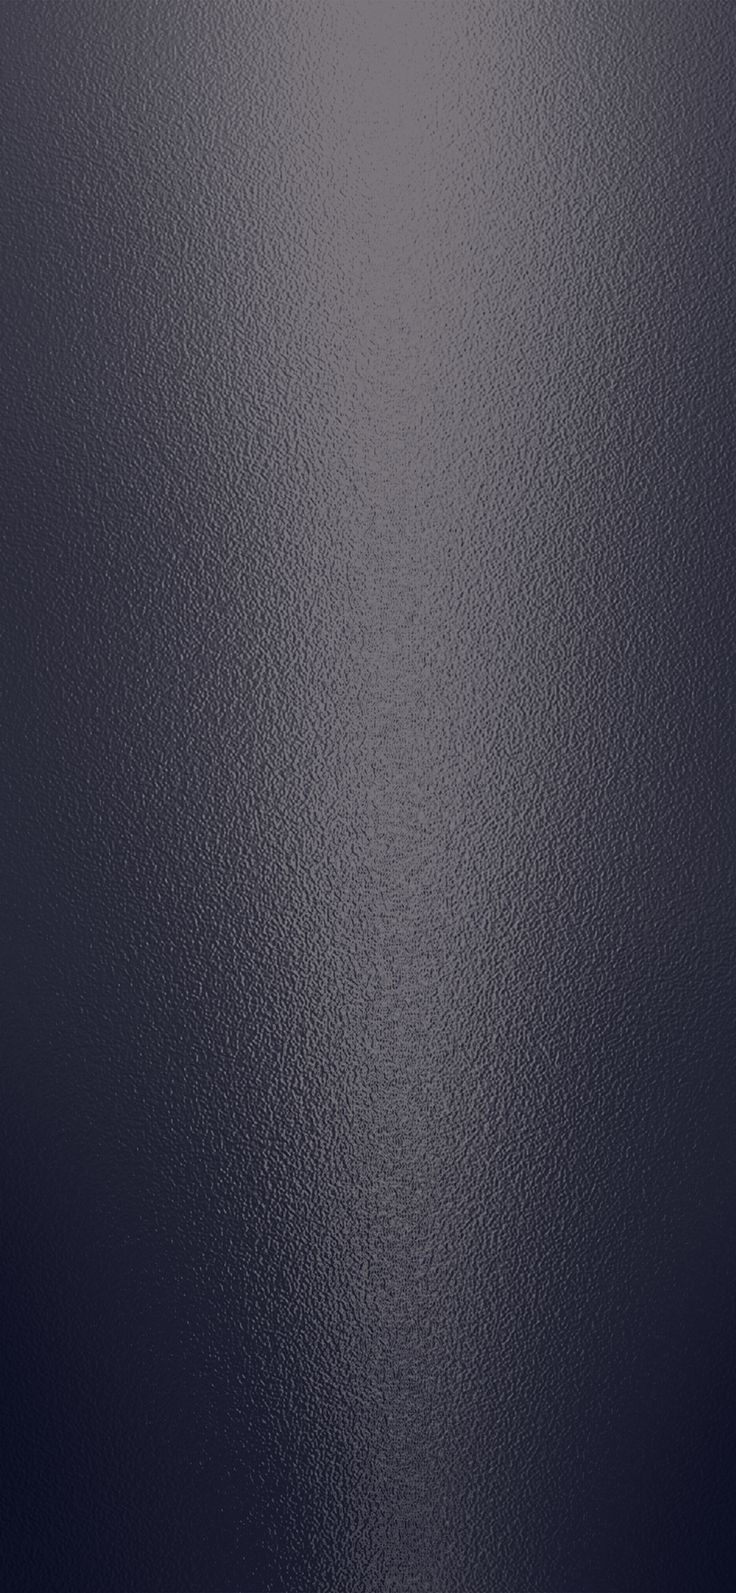 iPhone X wallpaper, texture dark blue metal pattern